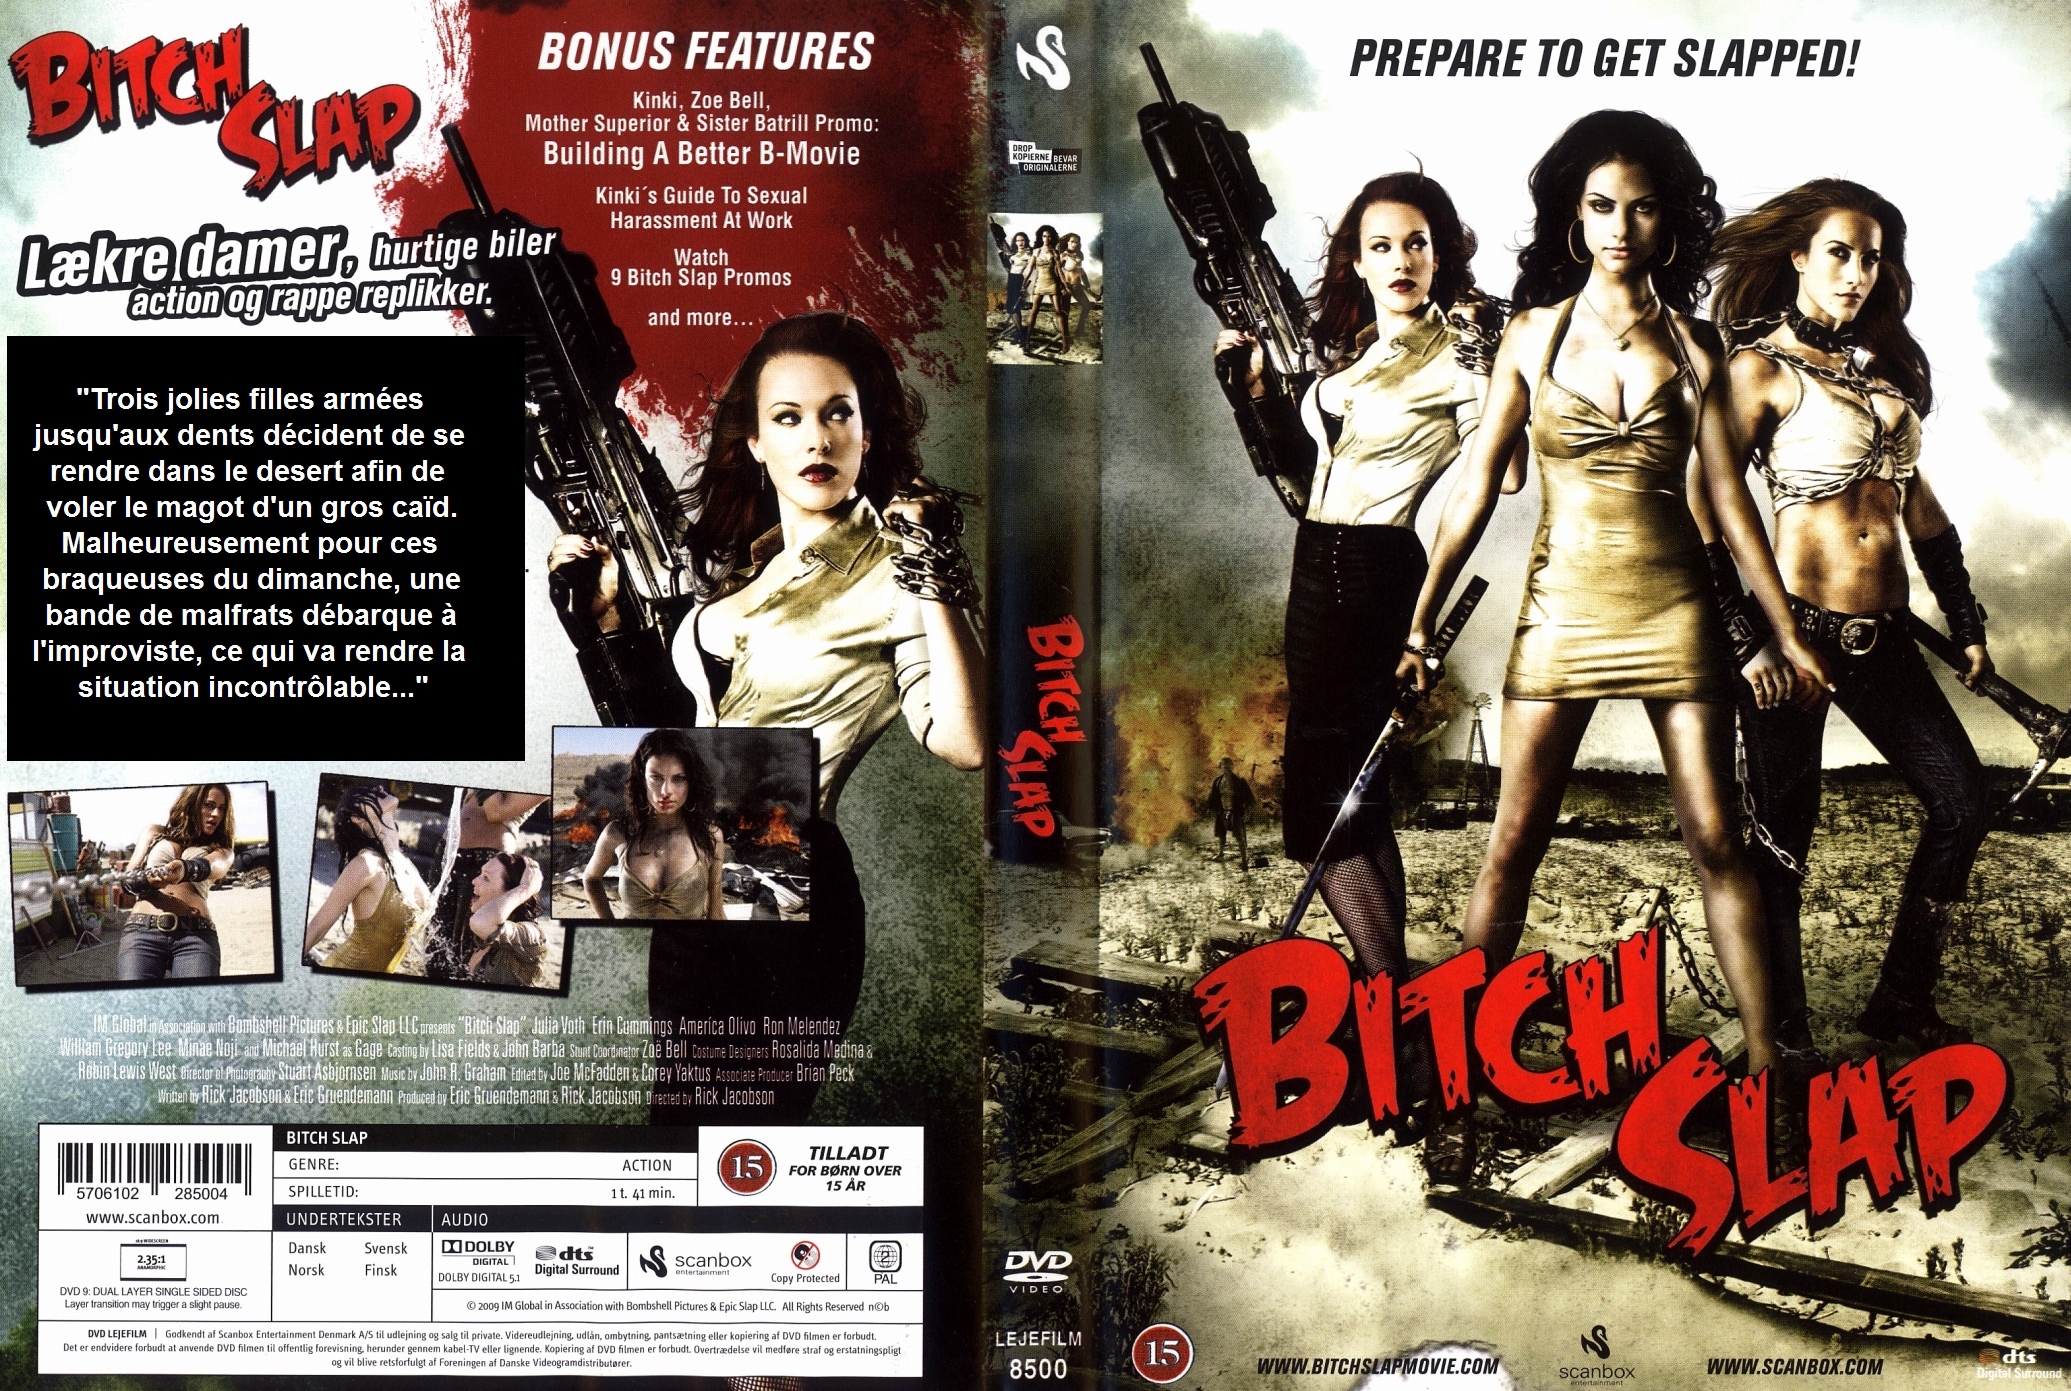 Jaquette DVD Bitch Slap custom